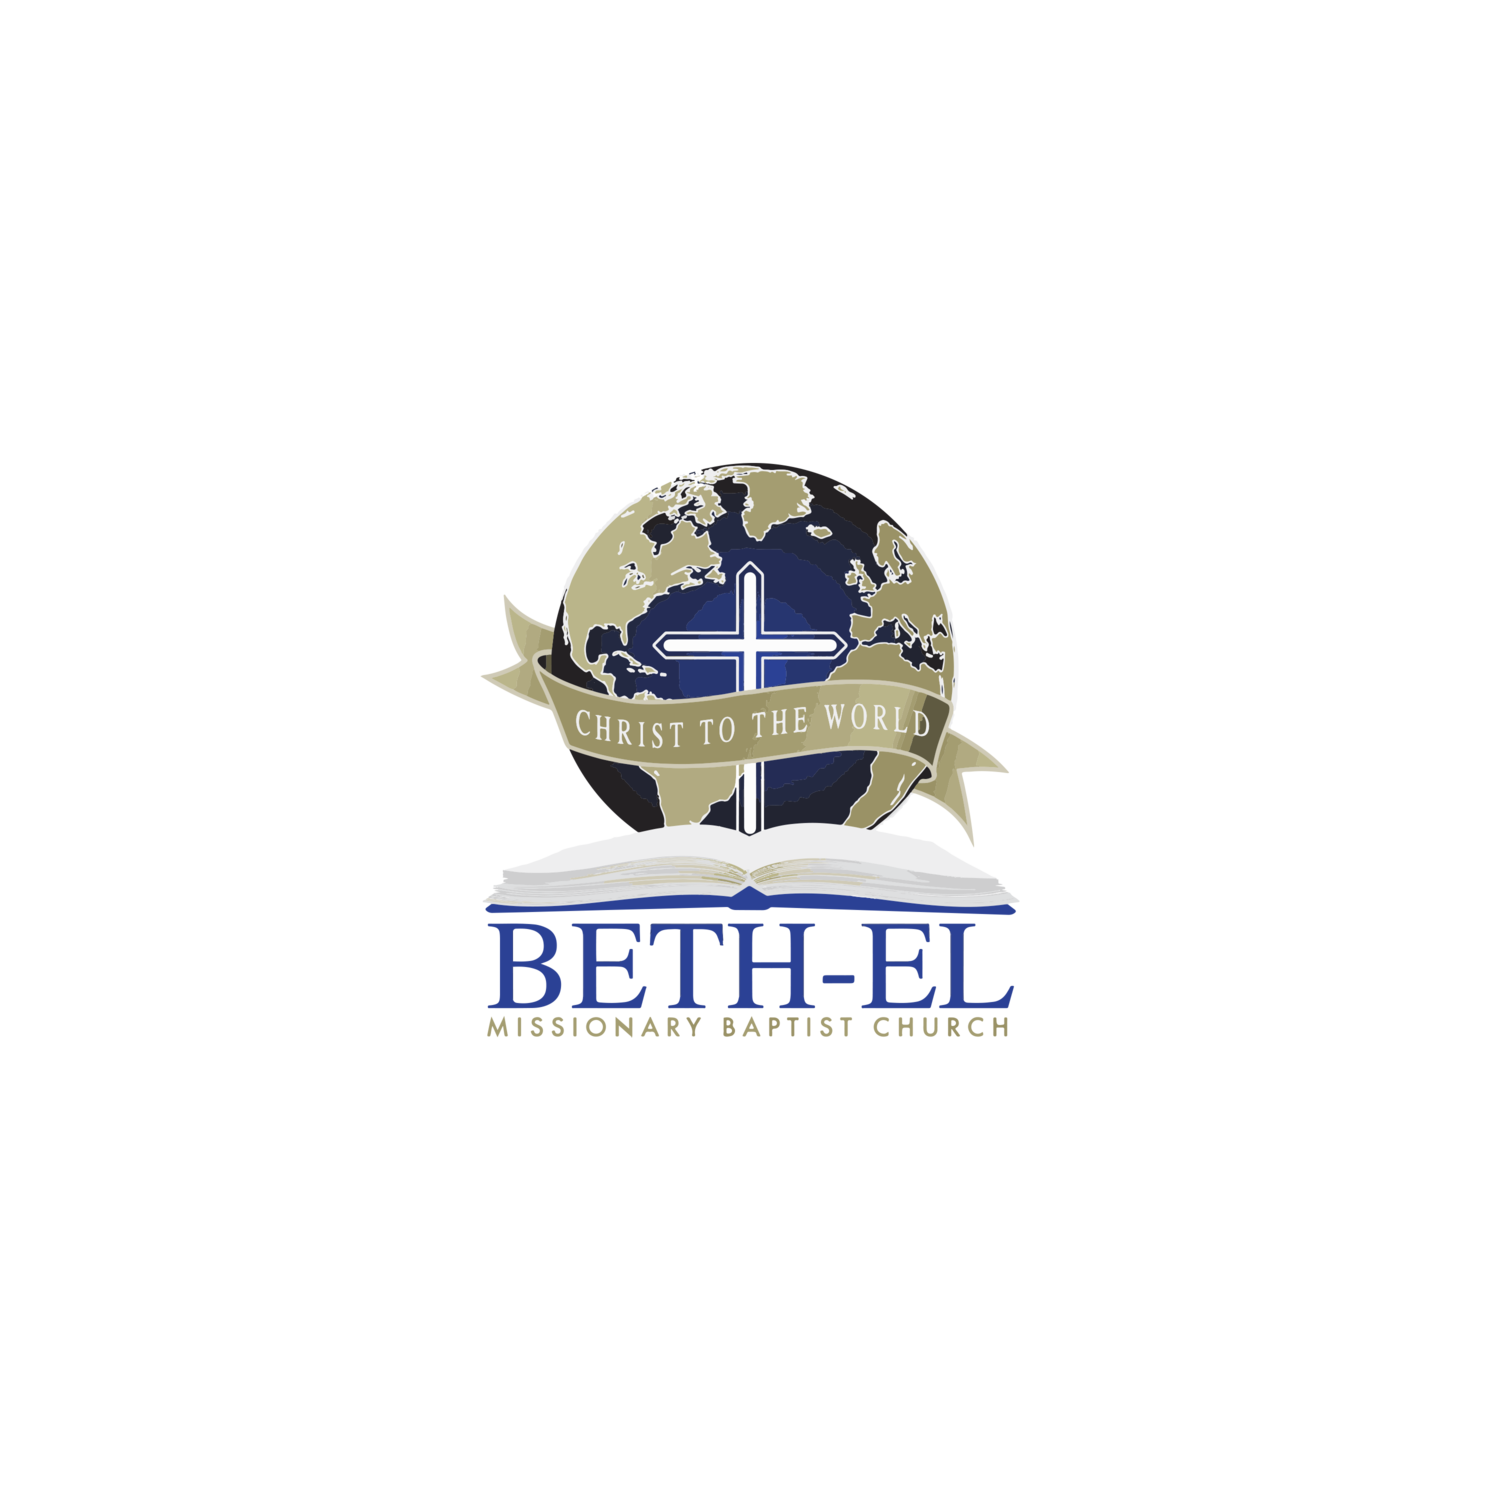 Beth-el Missionary Baptist